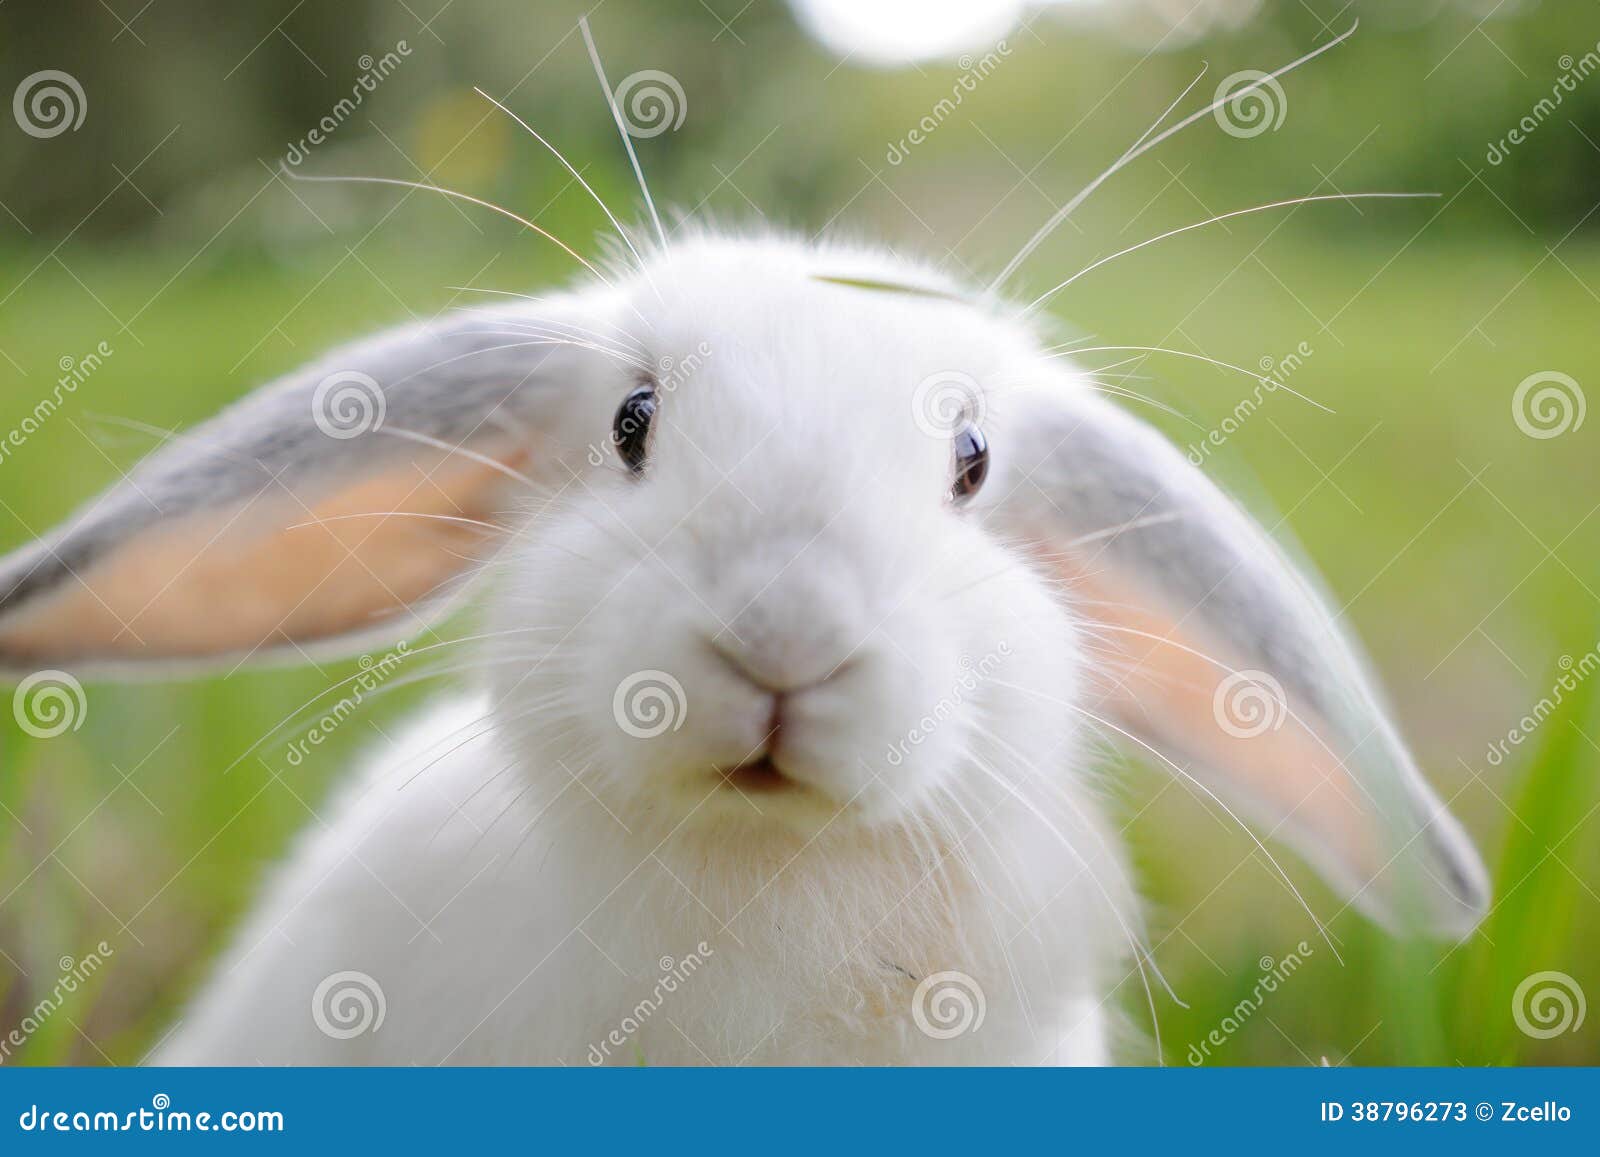 125,178 White Rabbit Stock Photos - Free & Royalty-Free Stock Photos from  Dreamstime